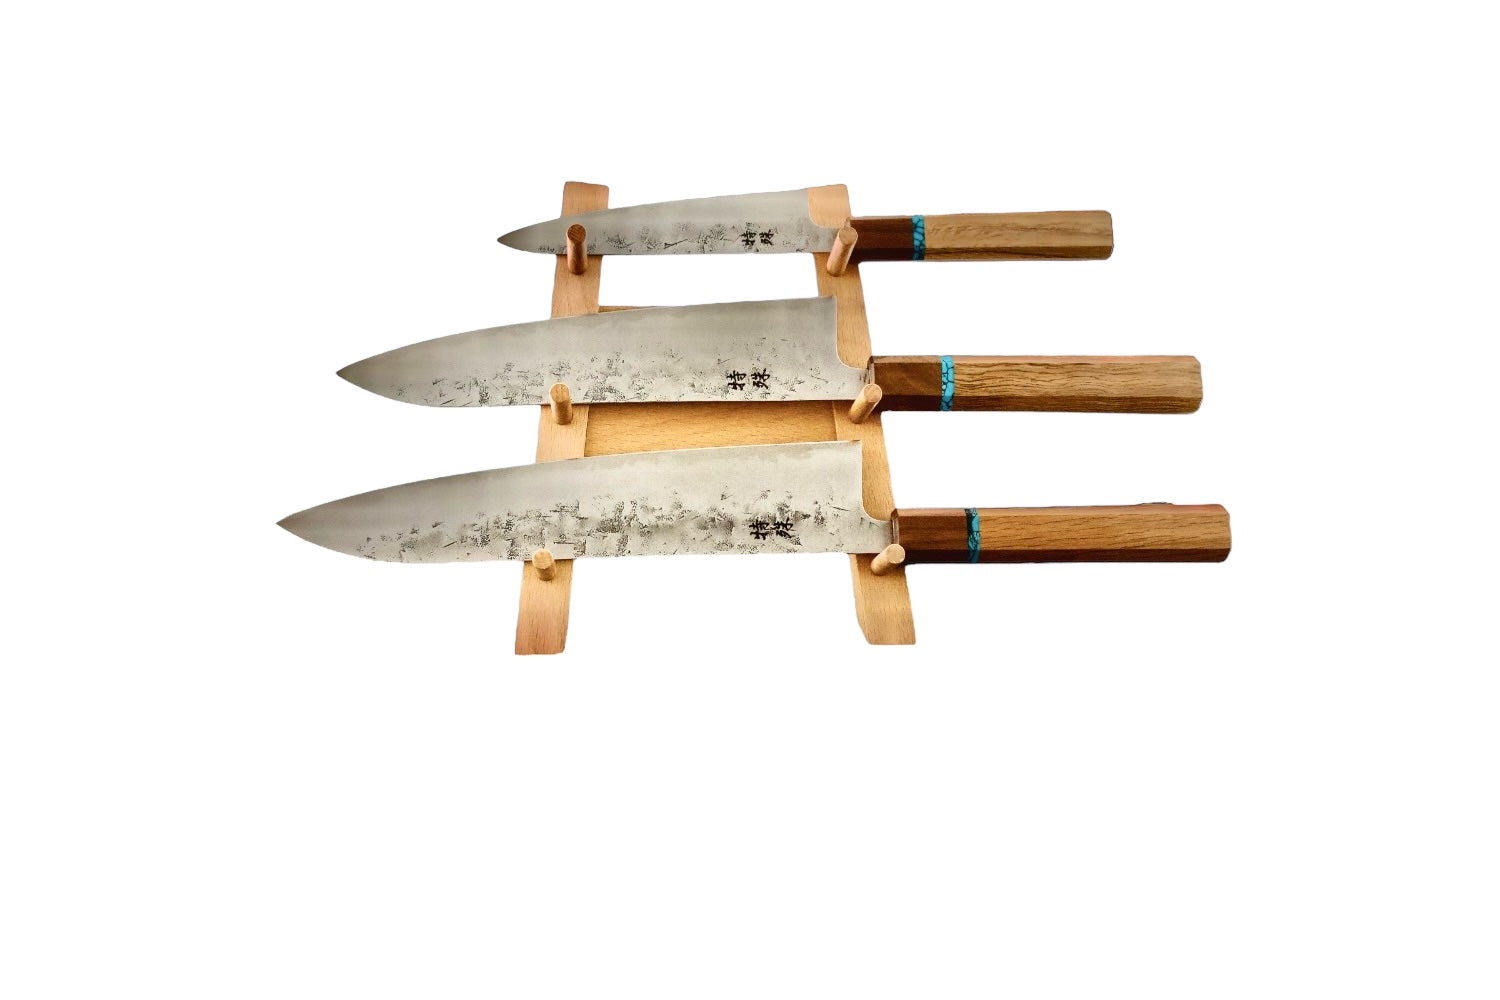 Tokushu Knife: Buy Japanese Knives and Custom Wa Handles Online